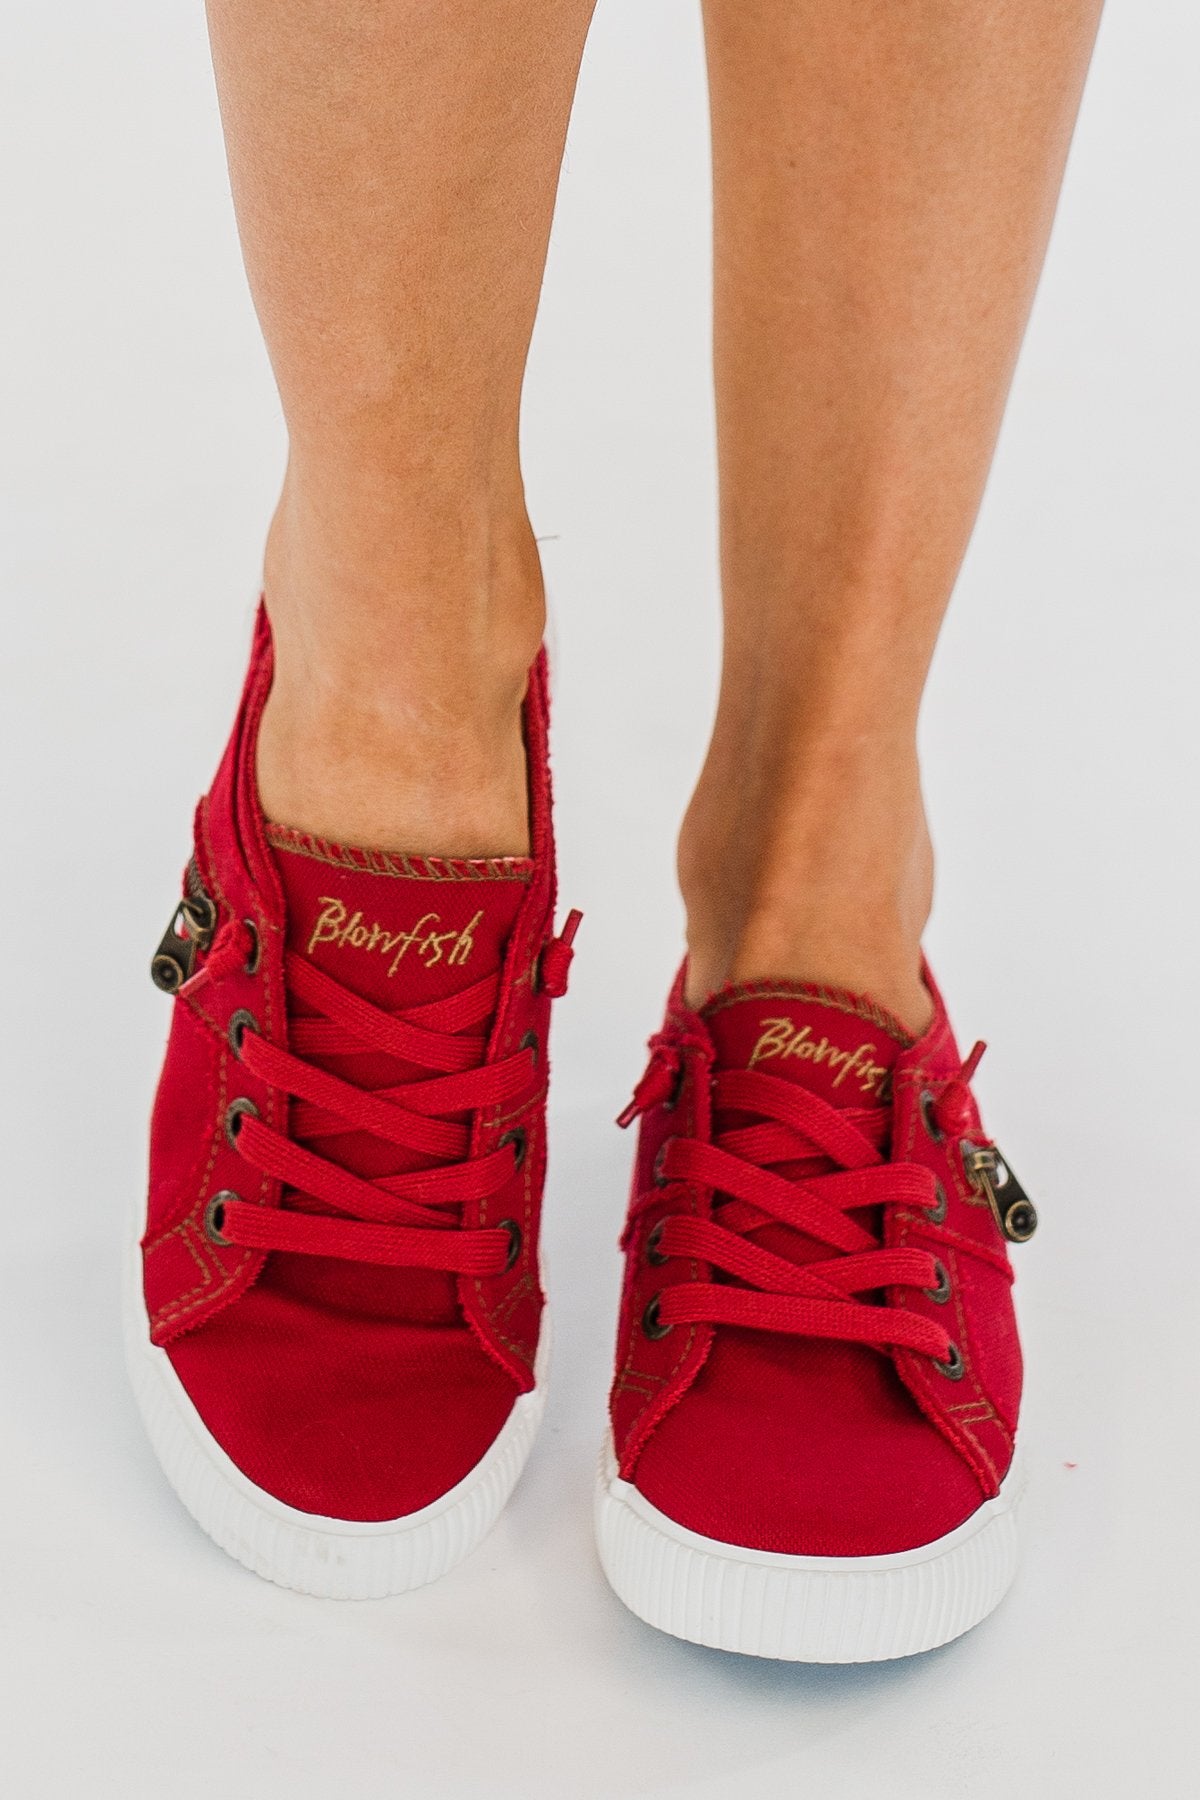 Blowfish Fruit Sneakers- Jester Red